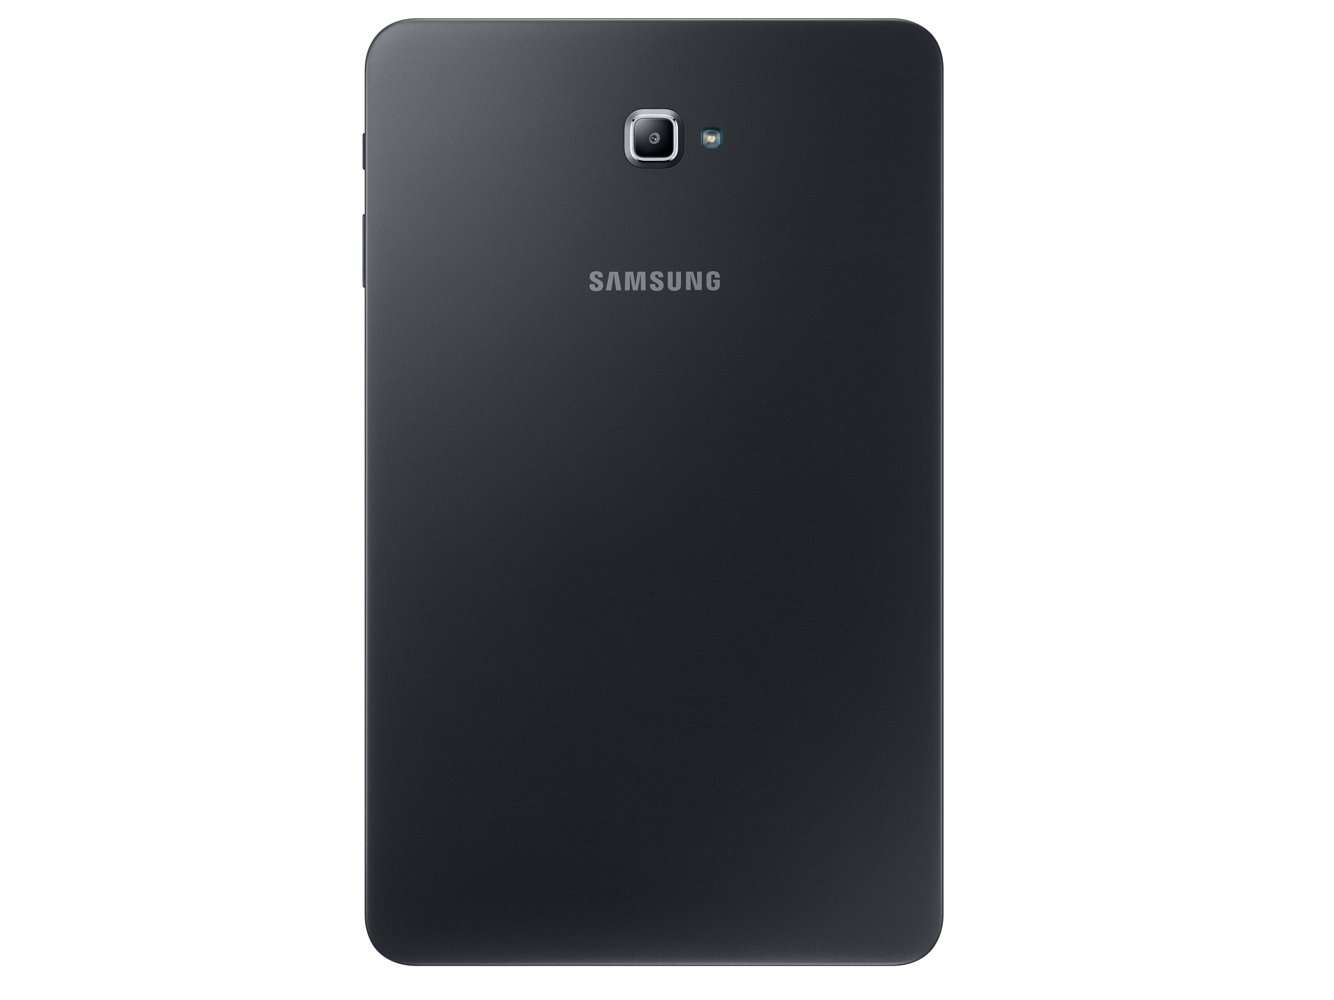 Samsung Galaxy Tab A 10.1 (2016) back view